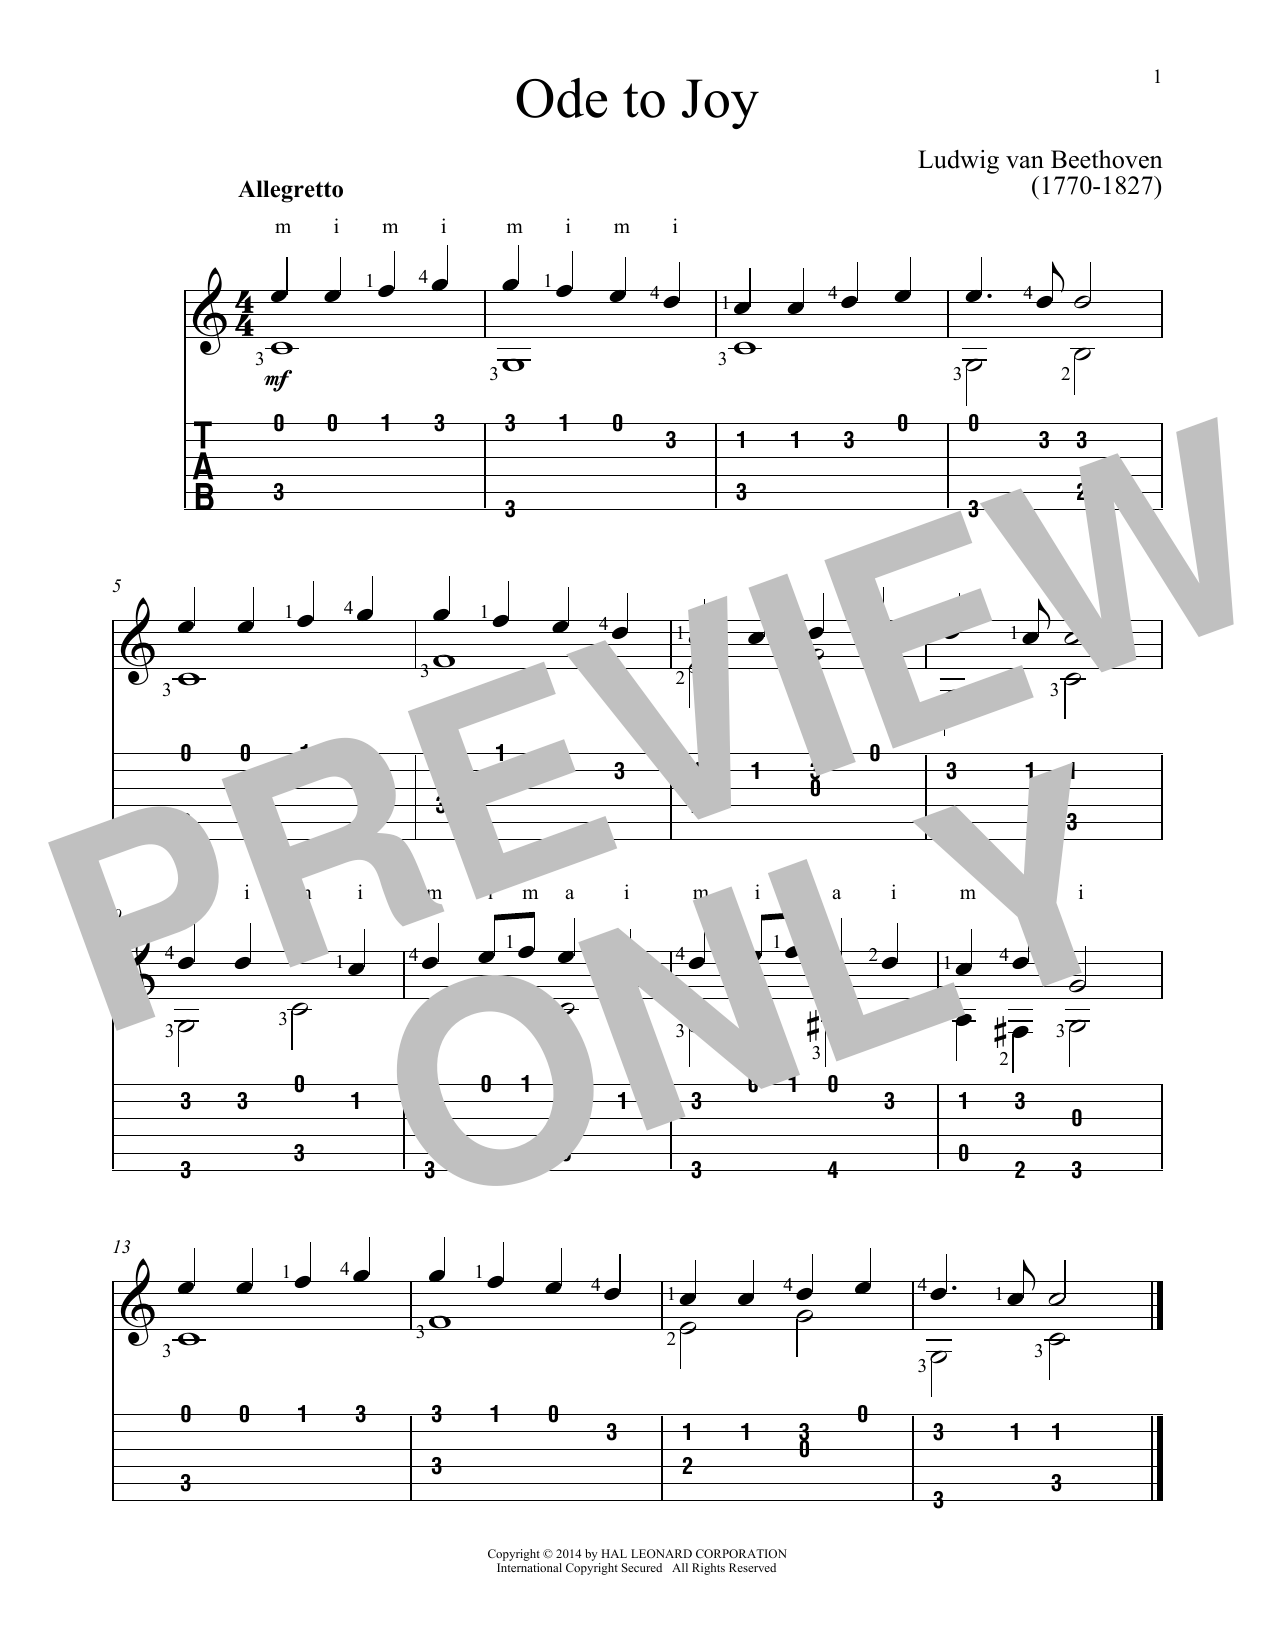 Ludwig van Beethoven Ode To Joy (arr. John Hill) Sheet Music Notes & Chords for Guitar Tab - Download or Print PDF